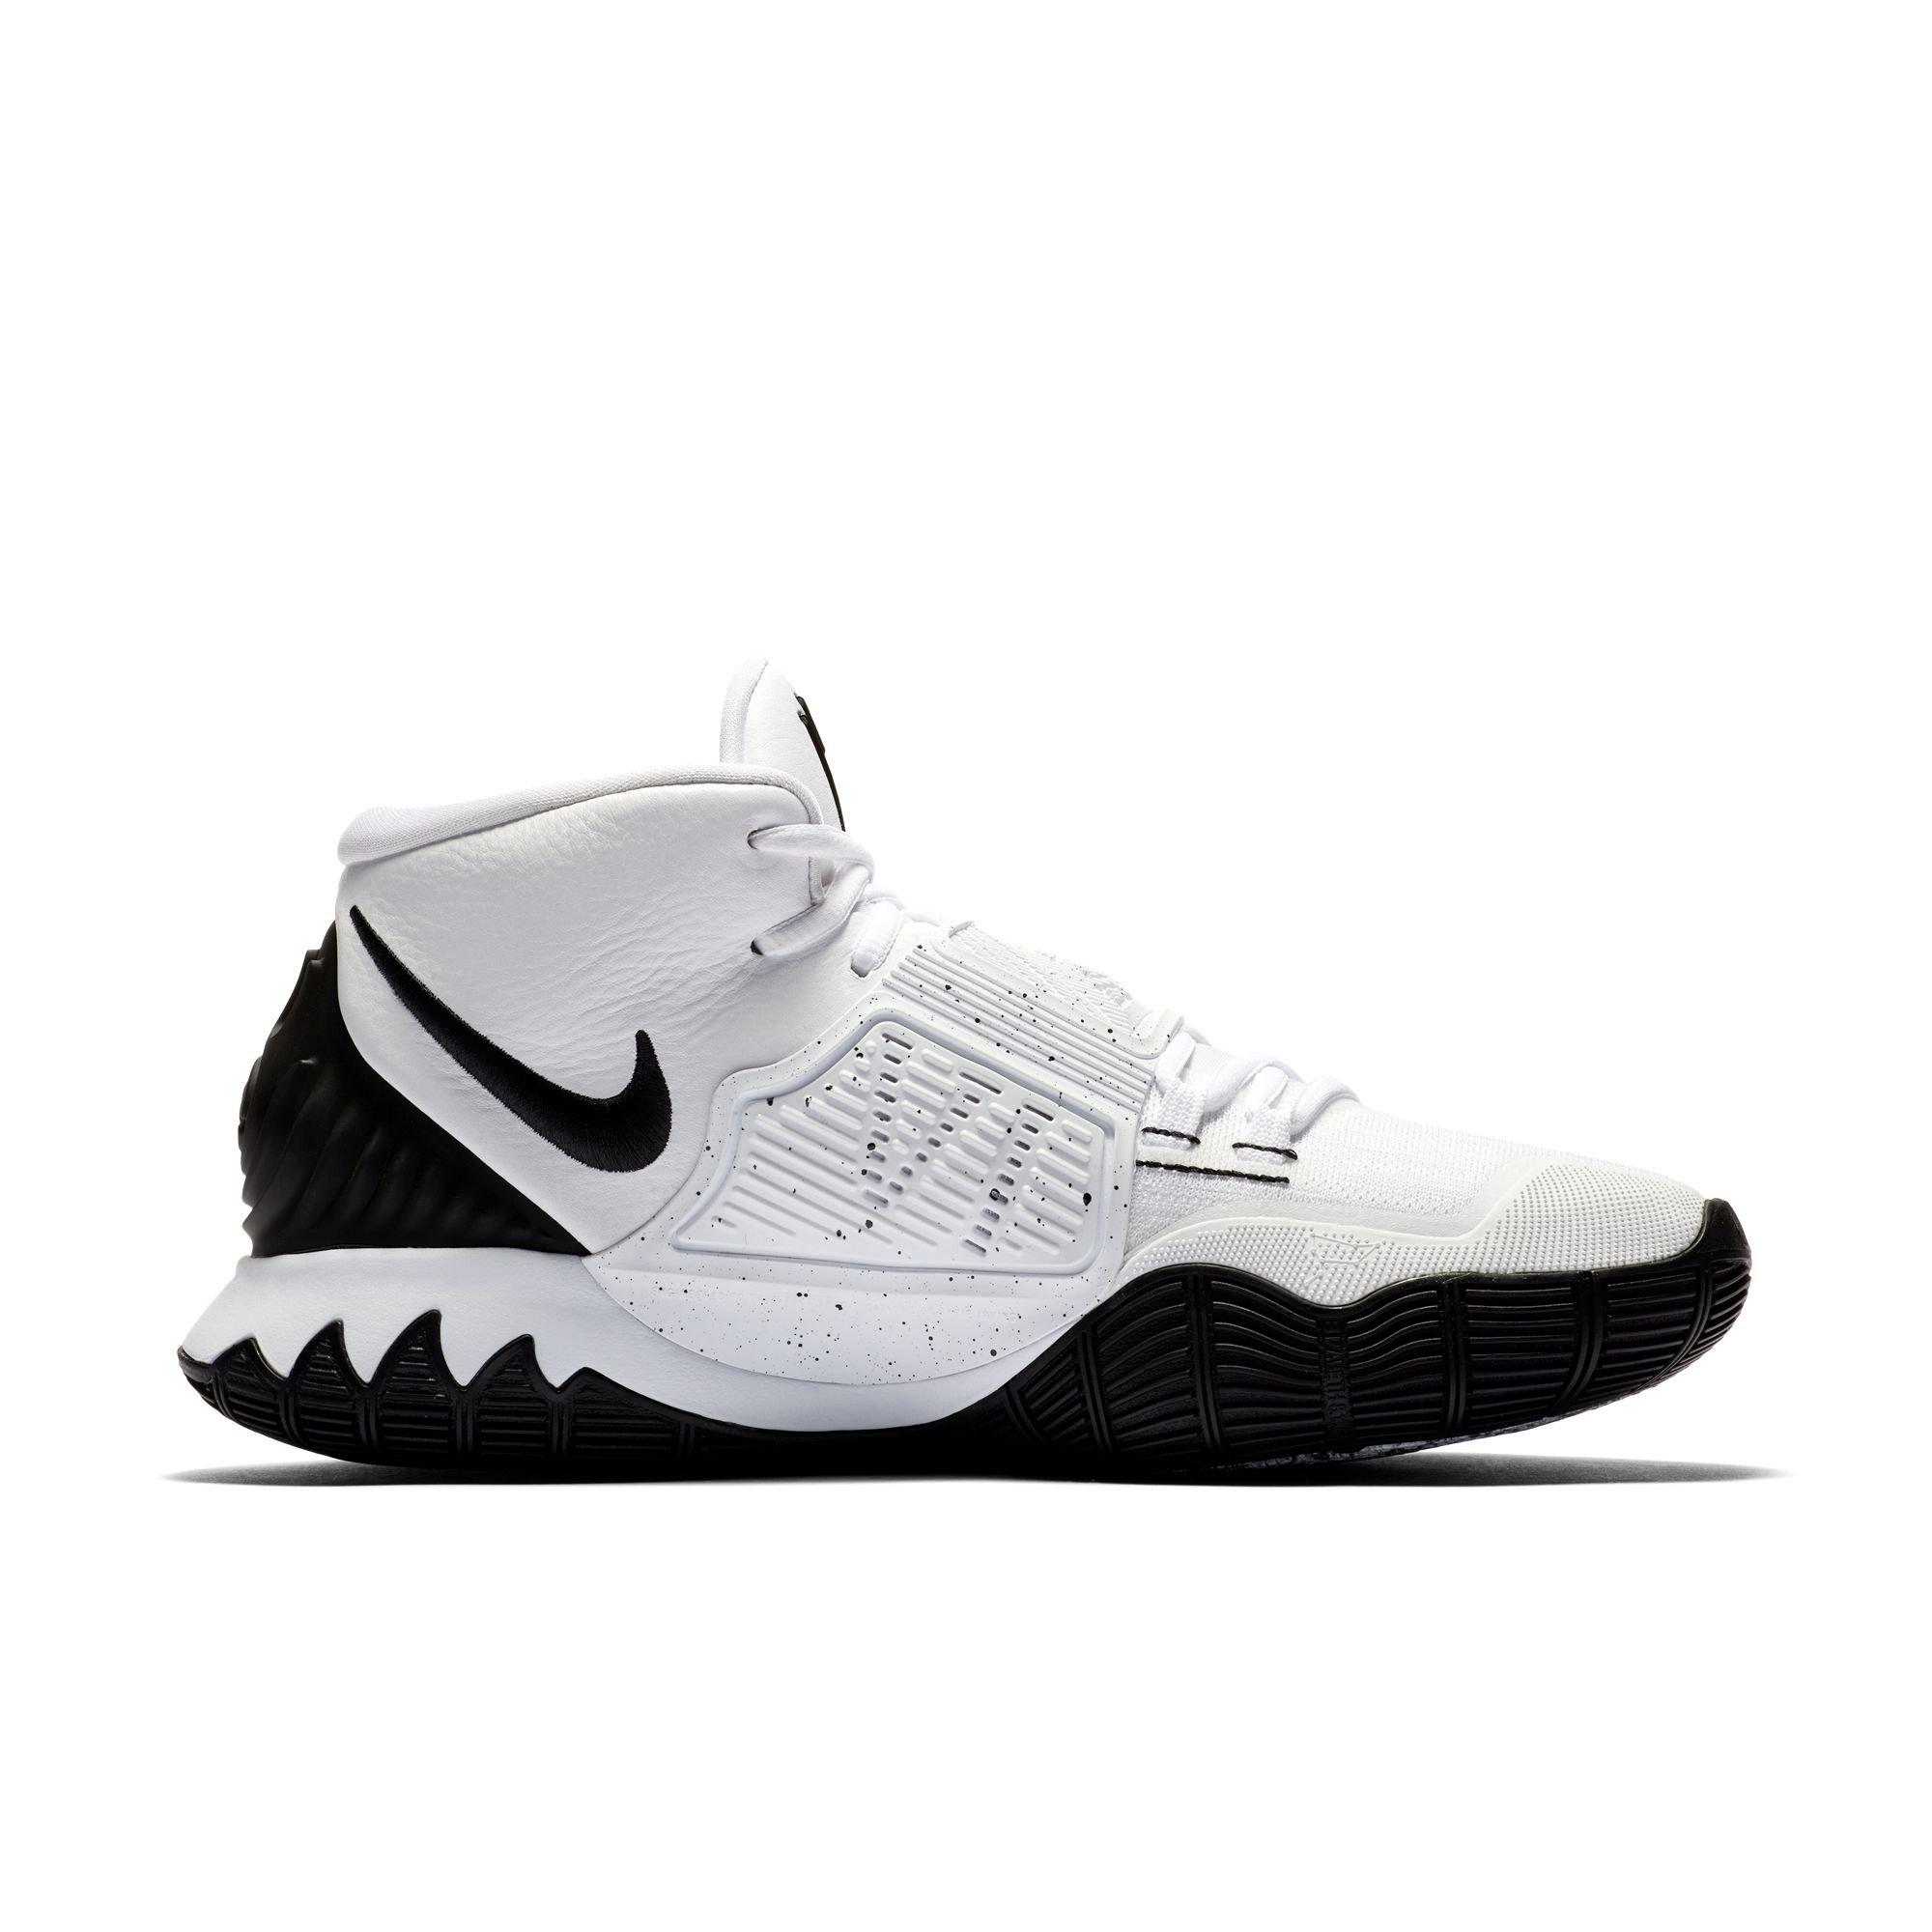 plain white basketball shoes